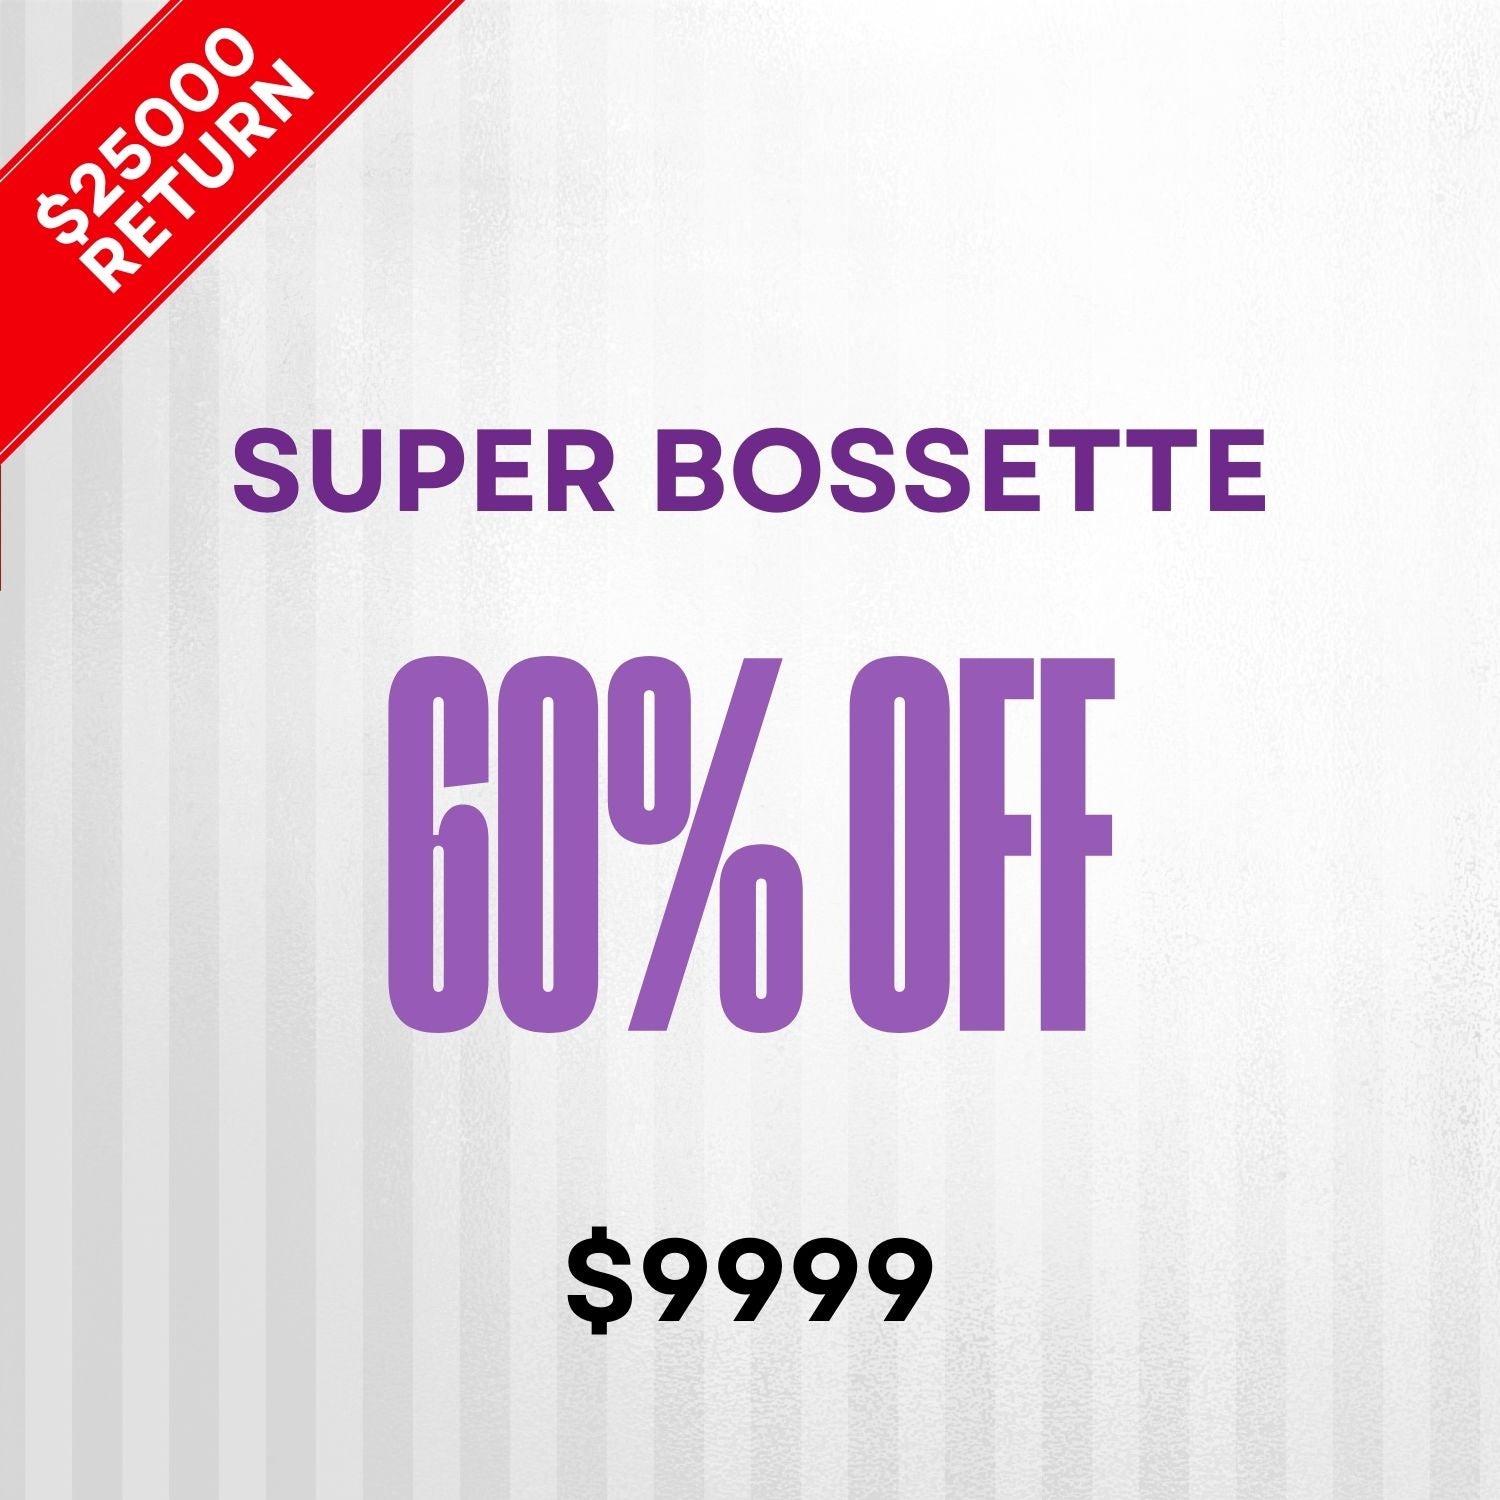 Super Bossette - 60% off